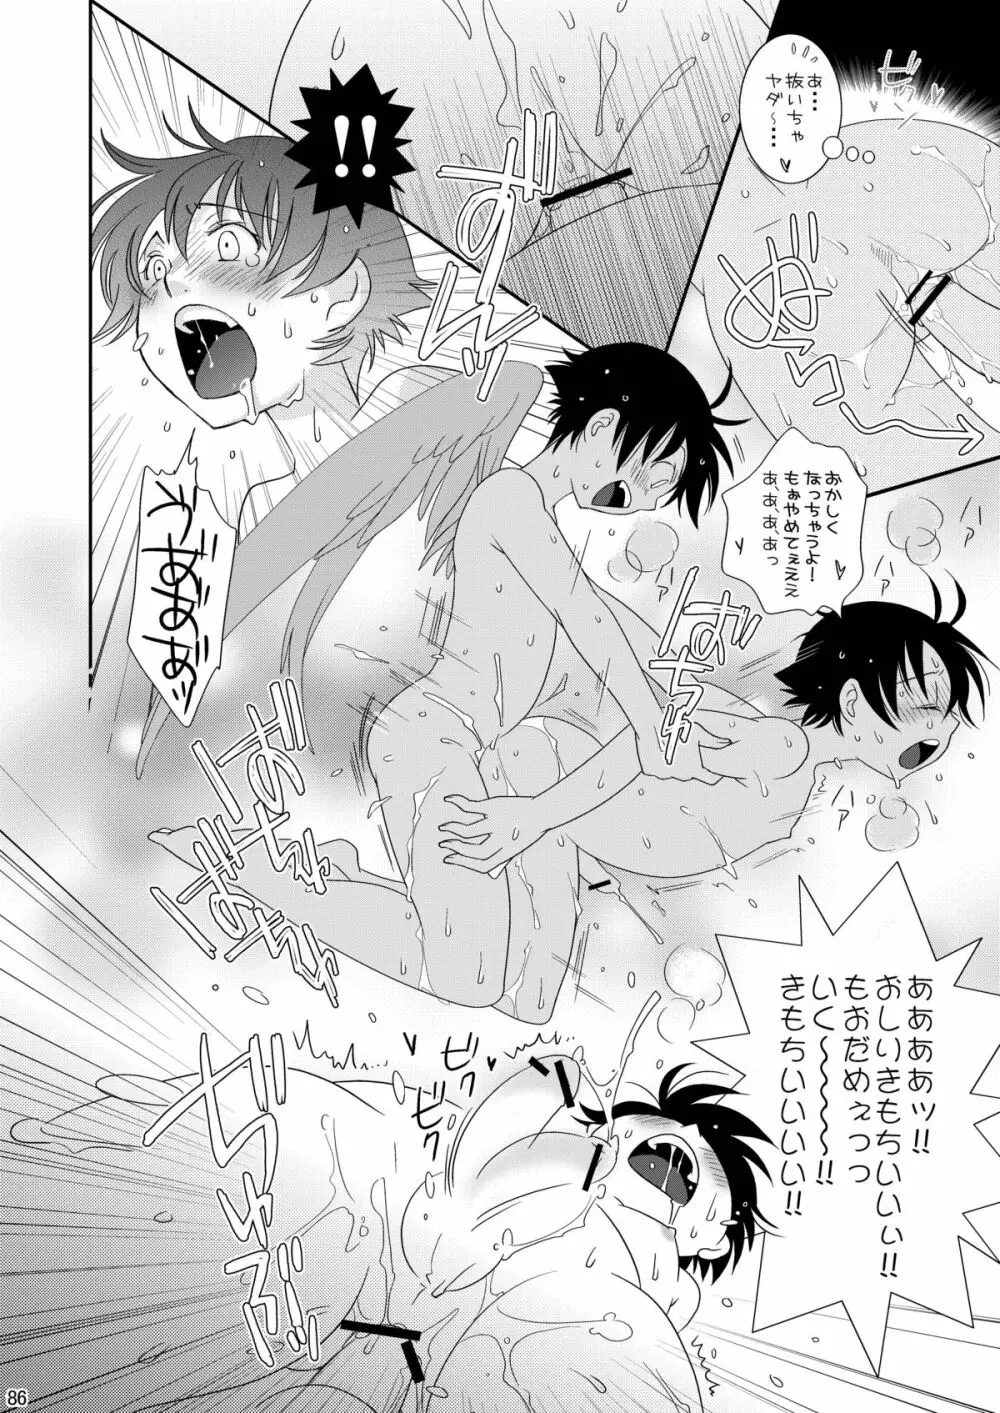 Re: ぷれい2 - page86